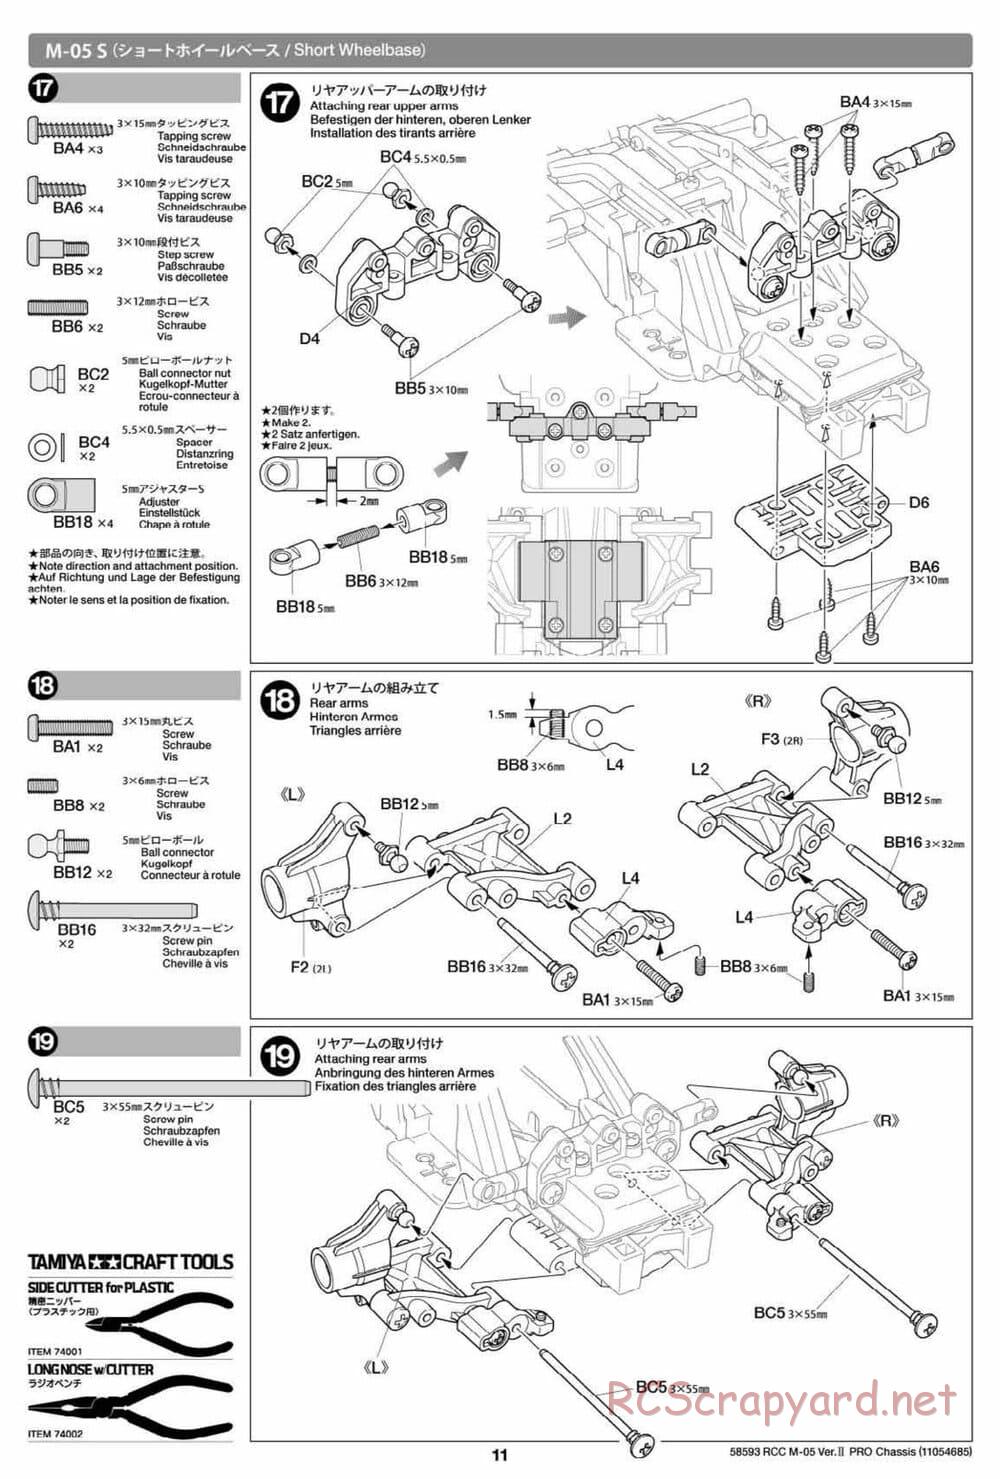 Tamiya - M-05 Ver.II Pro Chassis - Manual - Page 11